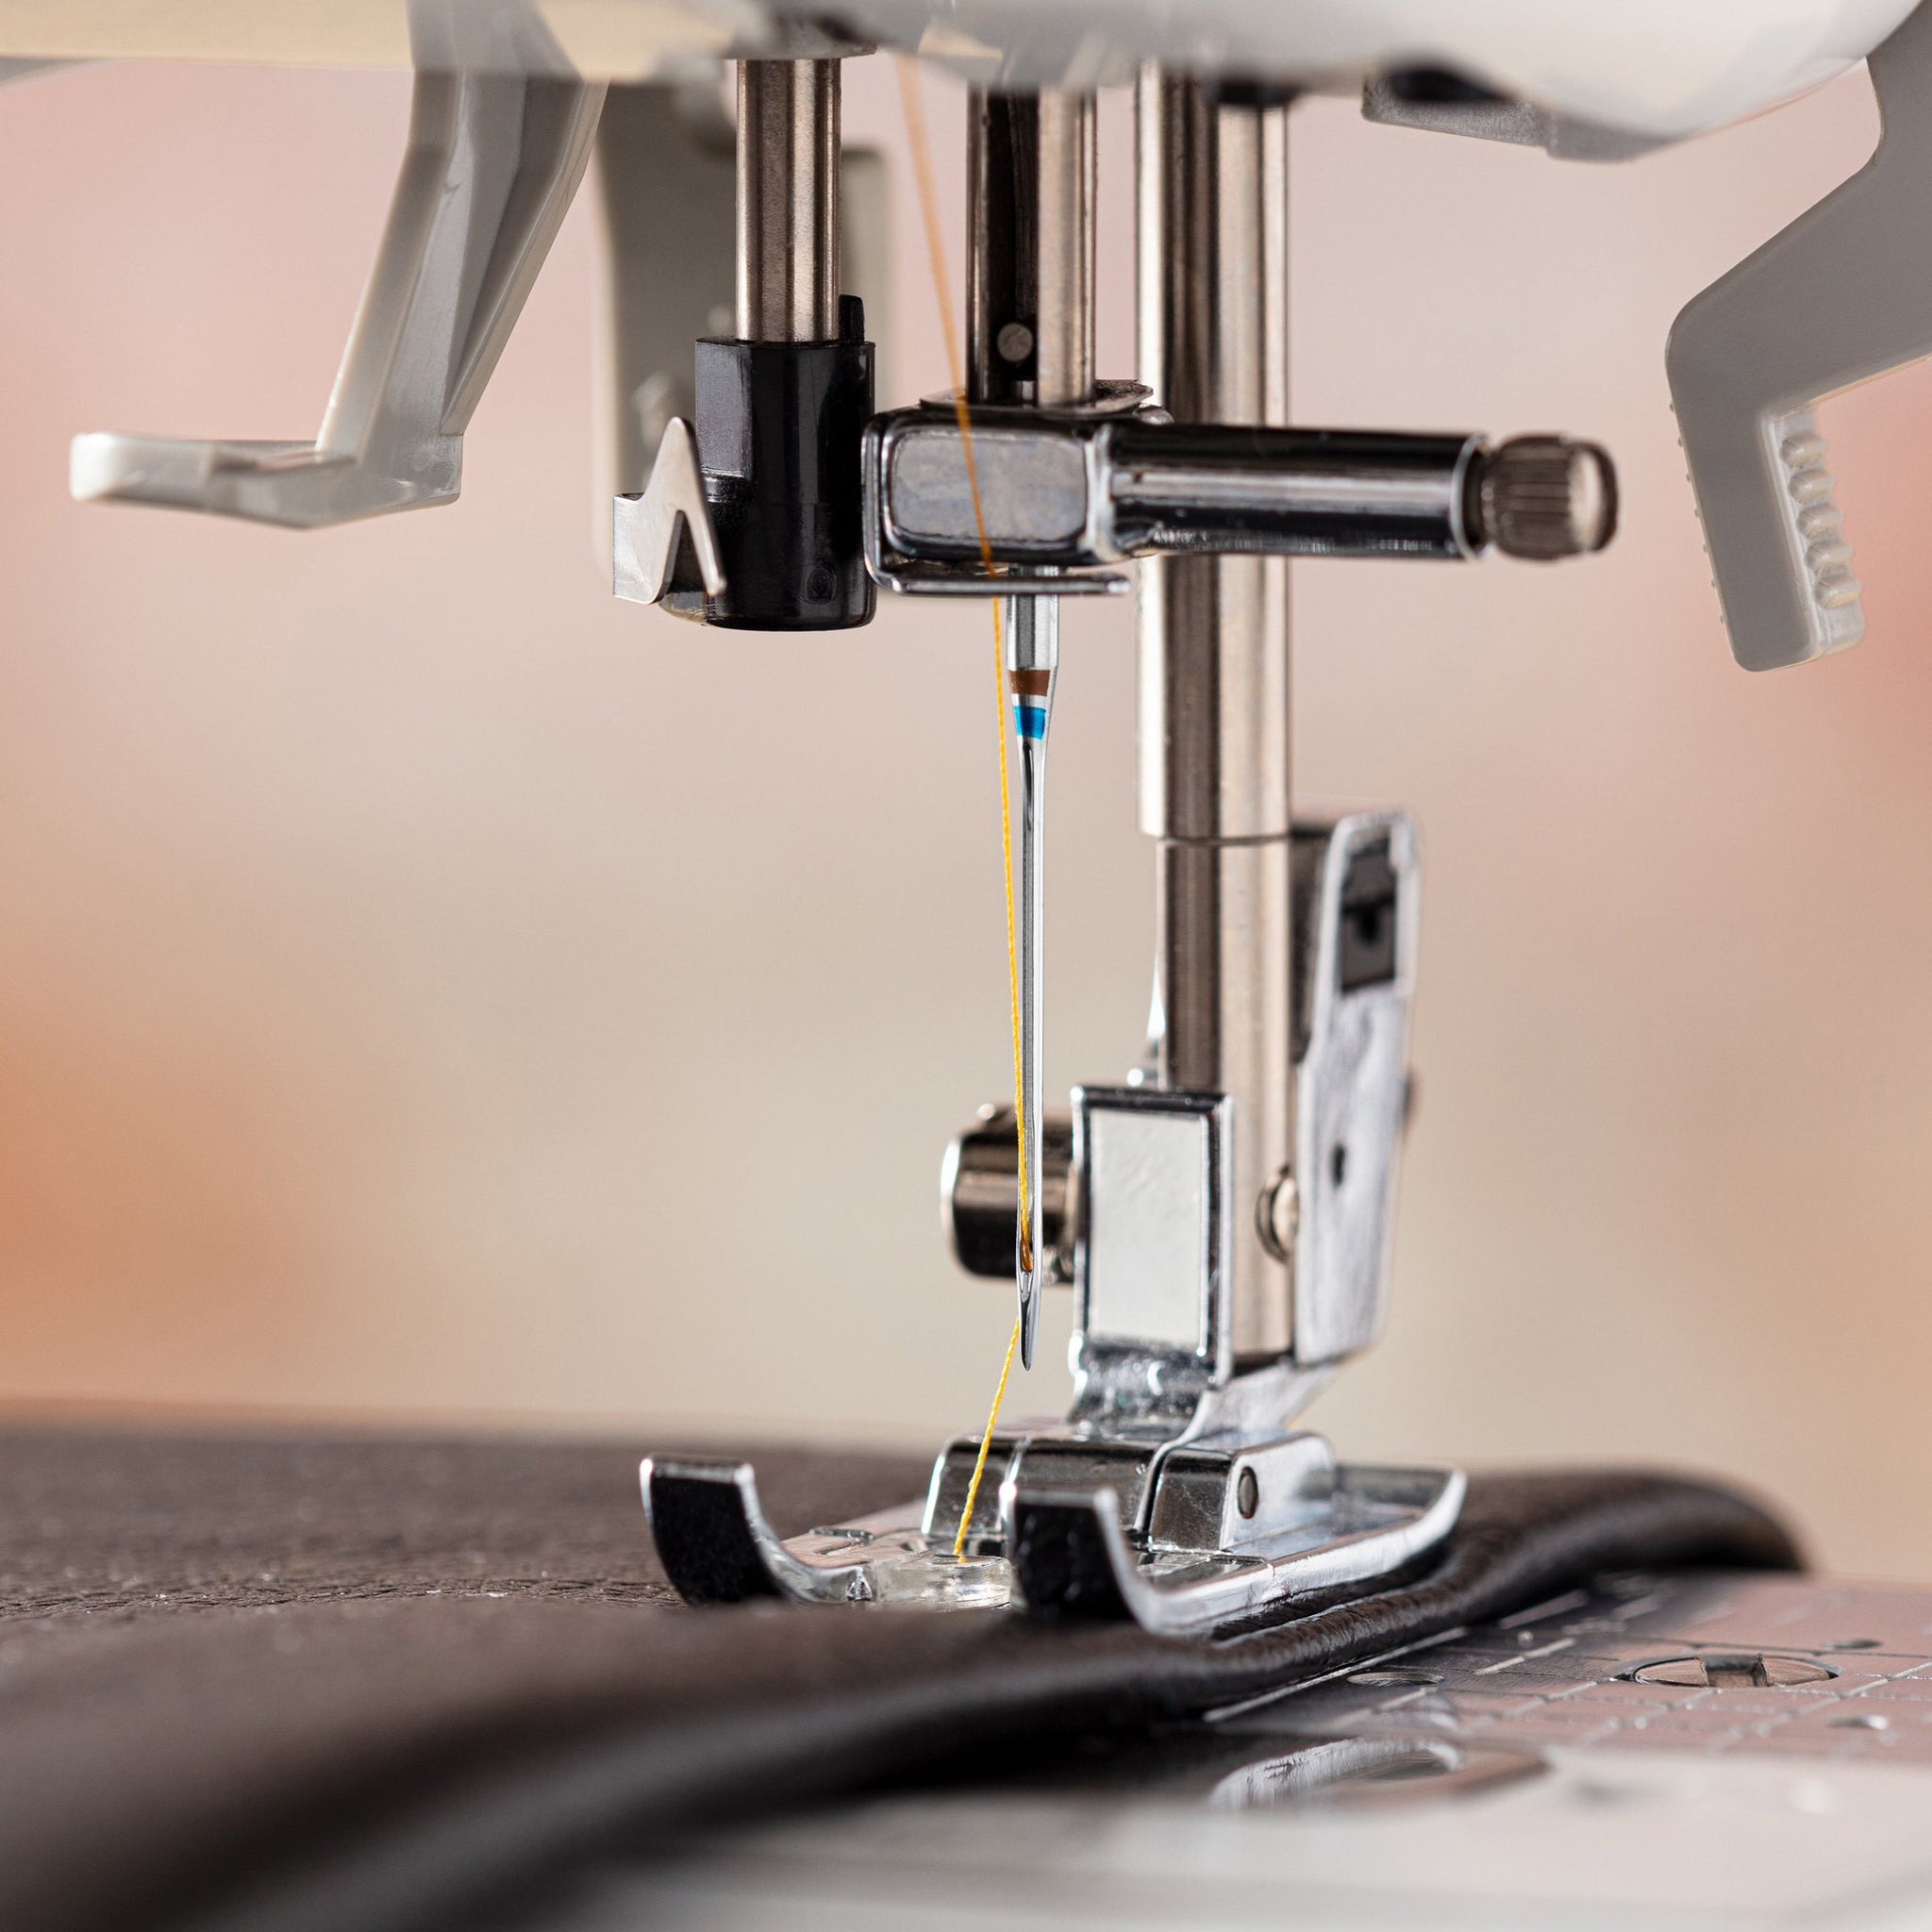 Schmetz Leather Sewing Machine Needles 130/705 HLL 1715 F – Brooklyn  General Store